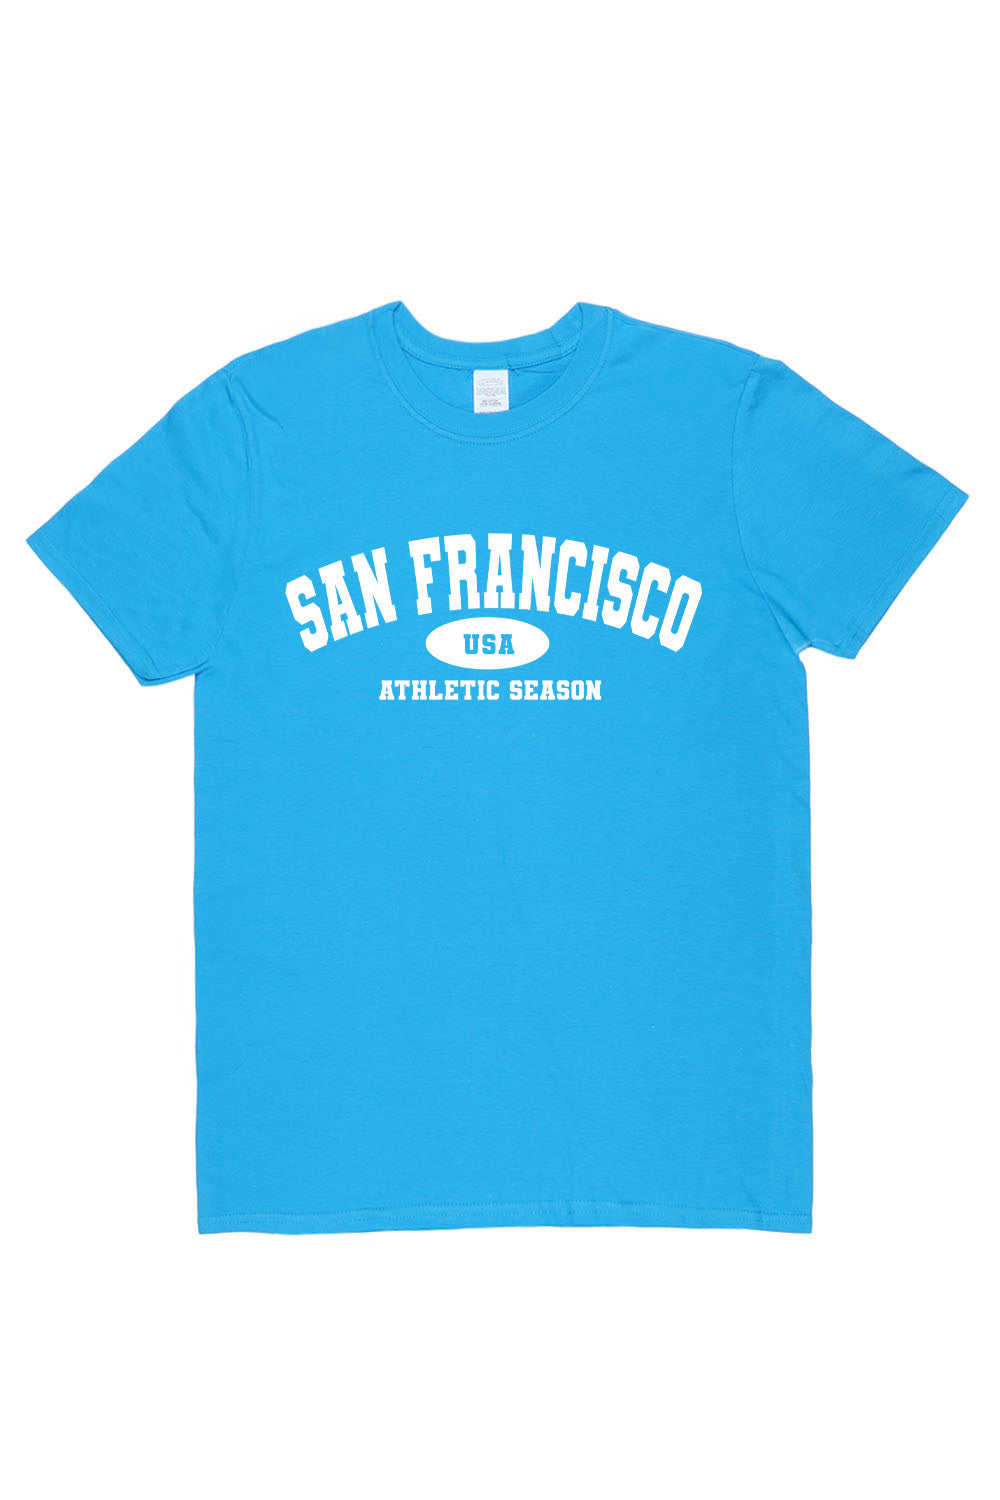 San Francisco T-Shirt in Sapphire Blue (Custom Packs)